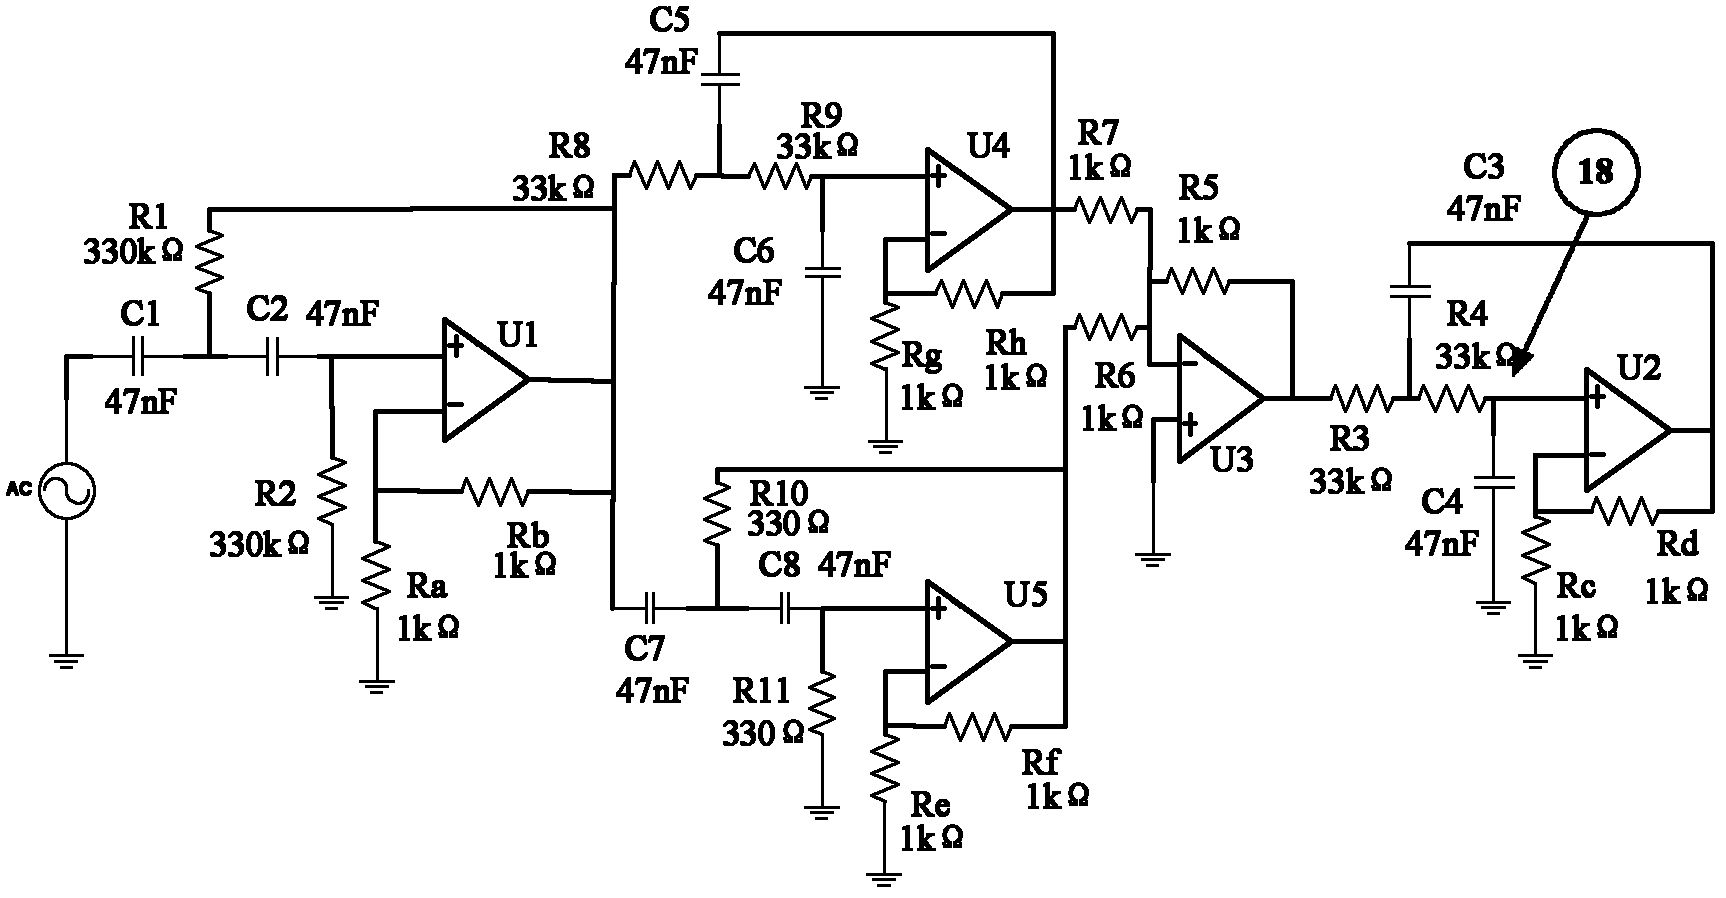 Circuit failure diagnosis method based on node information